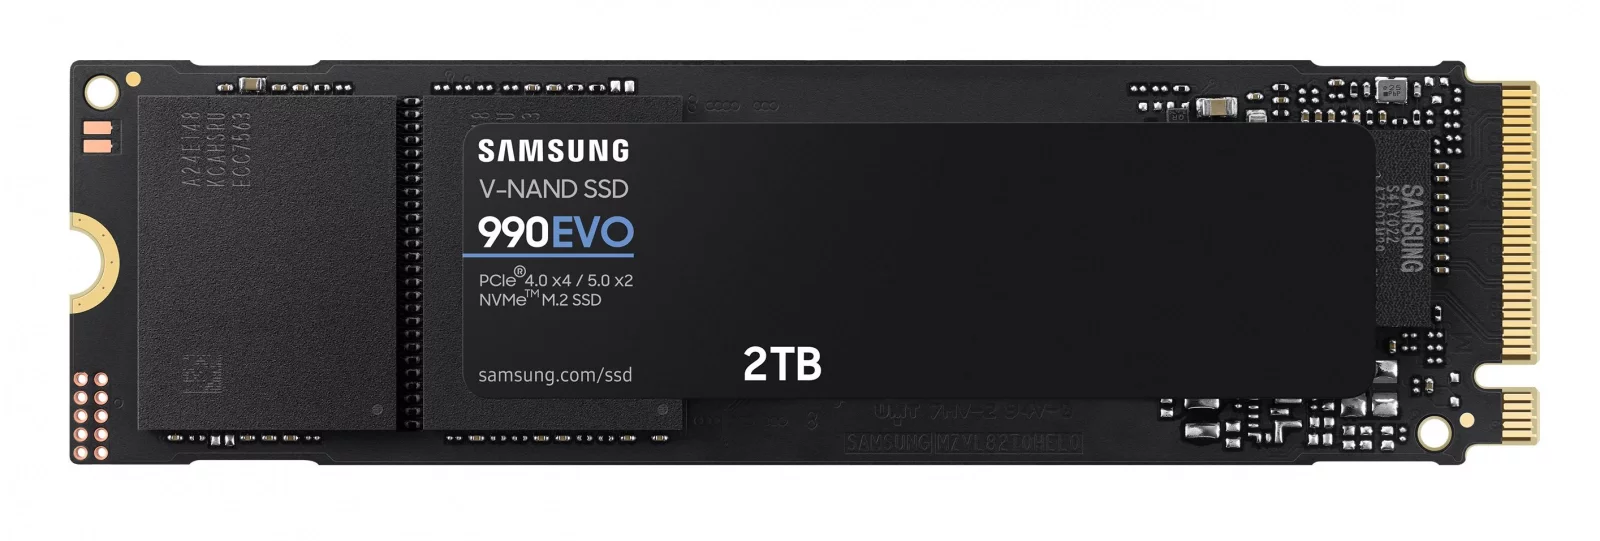 Samsung SSD disk 990 EVO